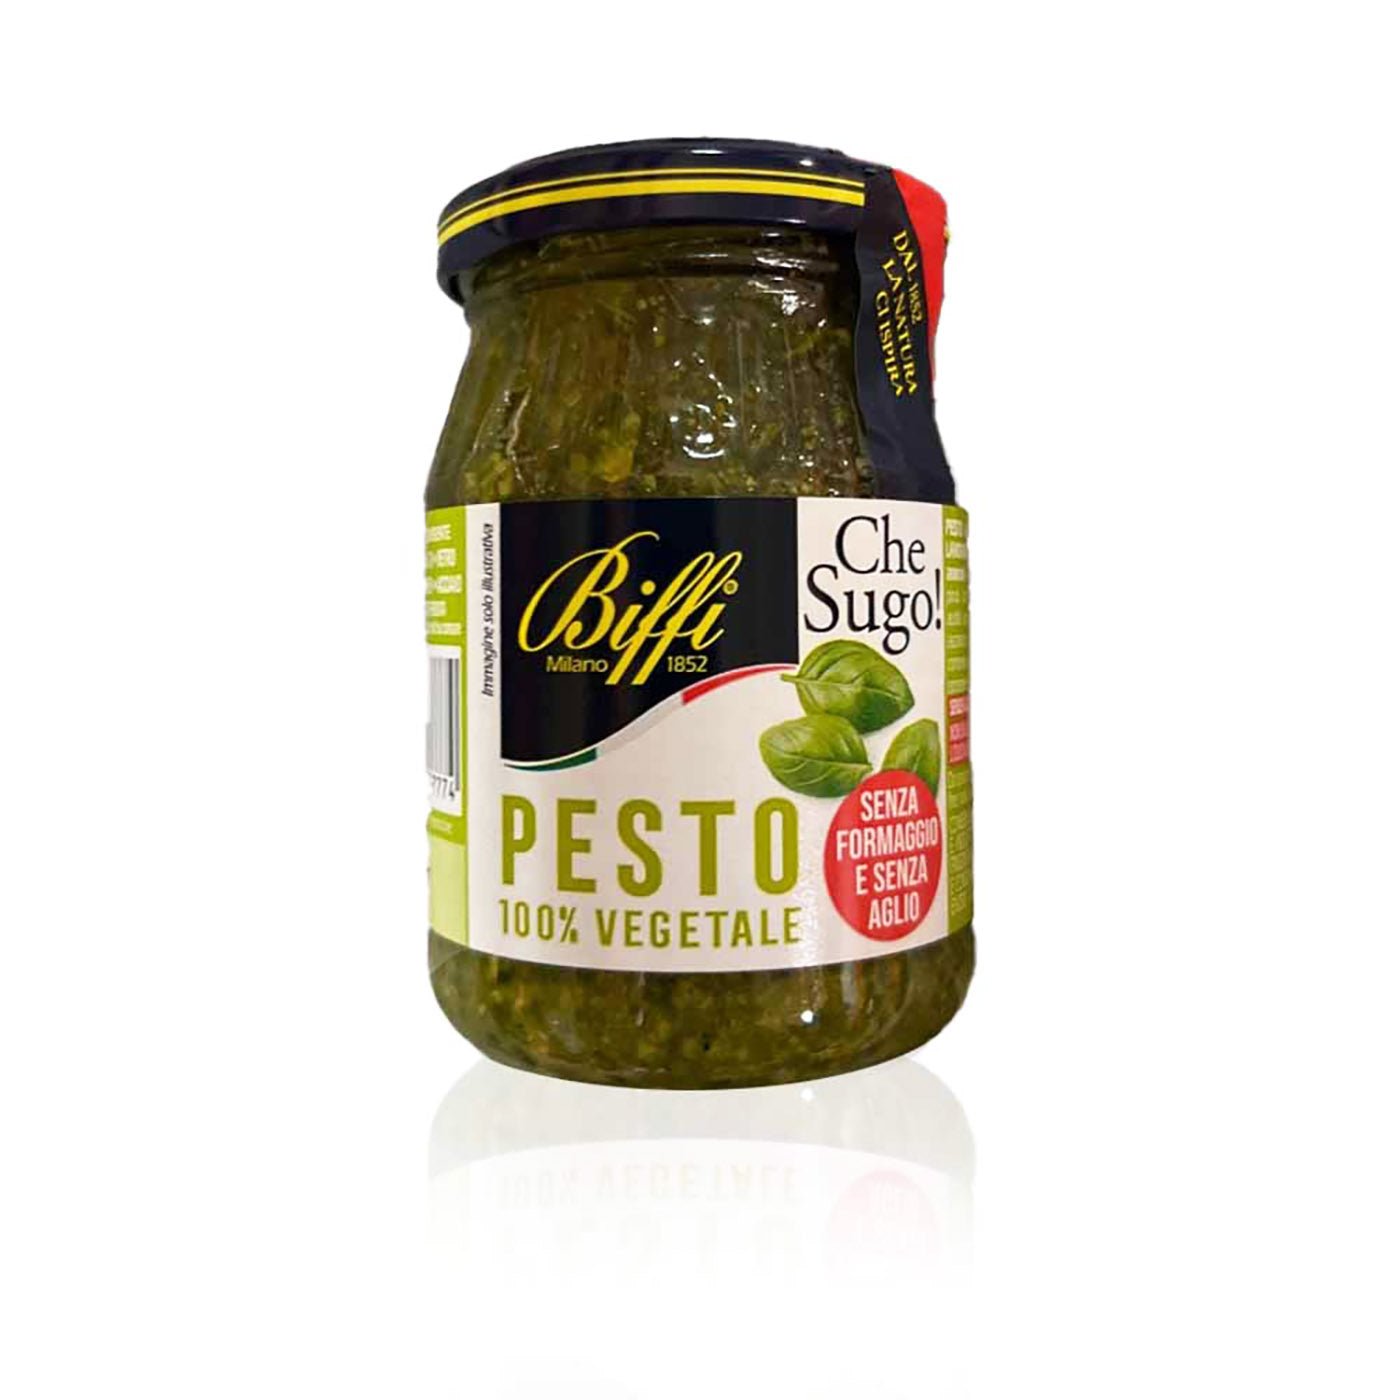 BIFFI Pesto 100% vegetale- Pesto vegan- 0,190kg - italienisch-einkaufen.de